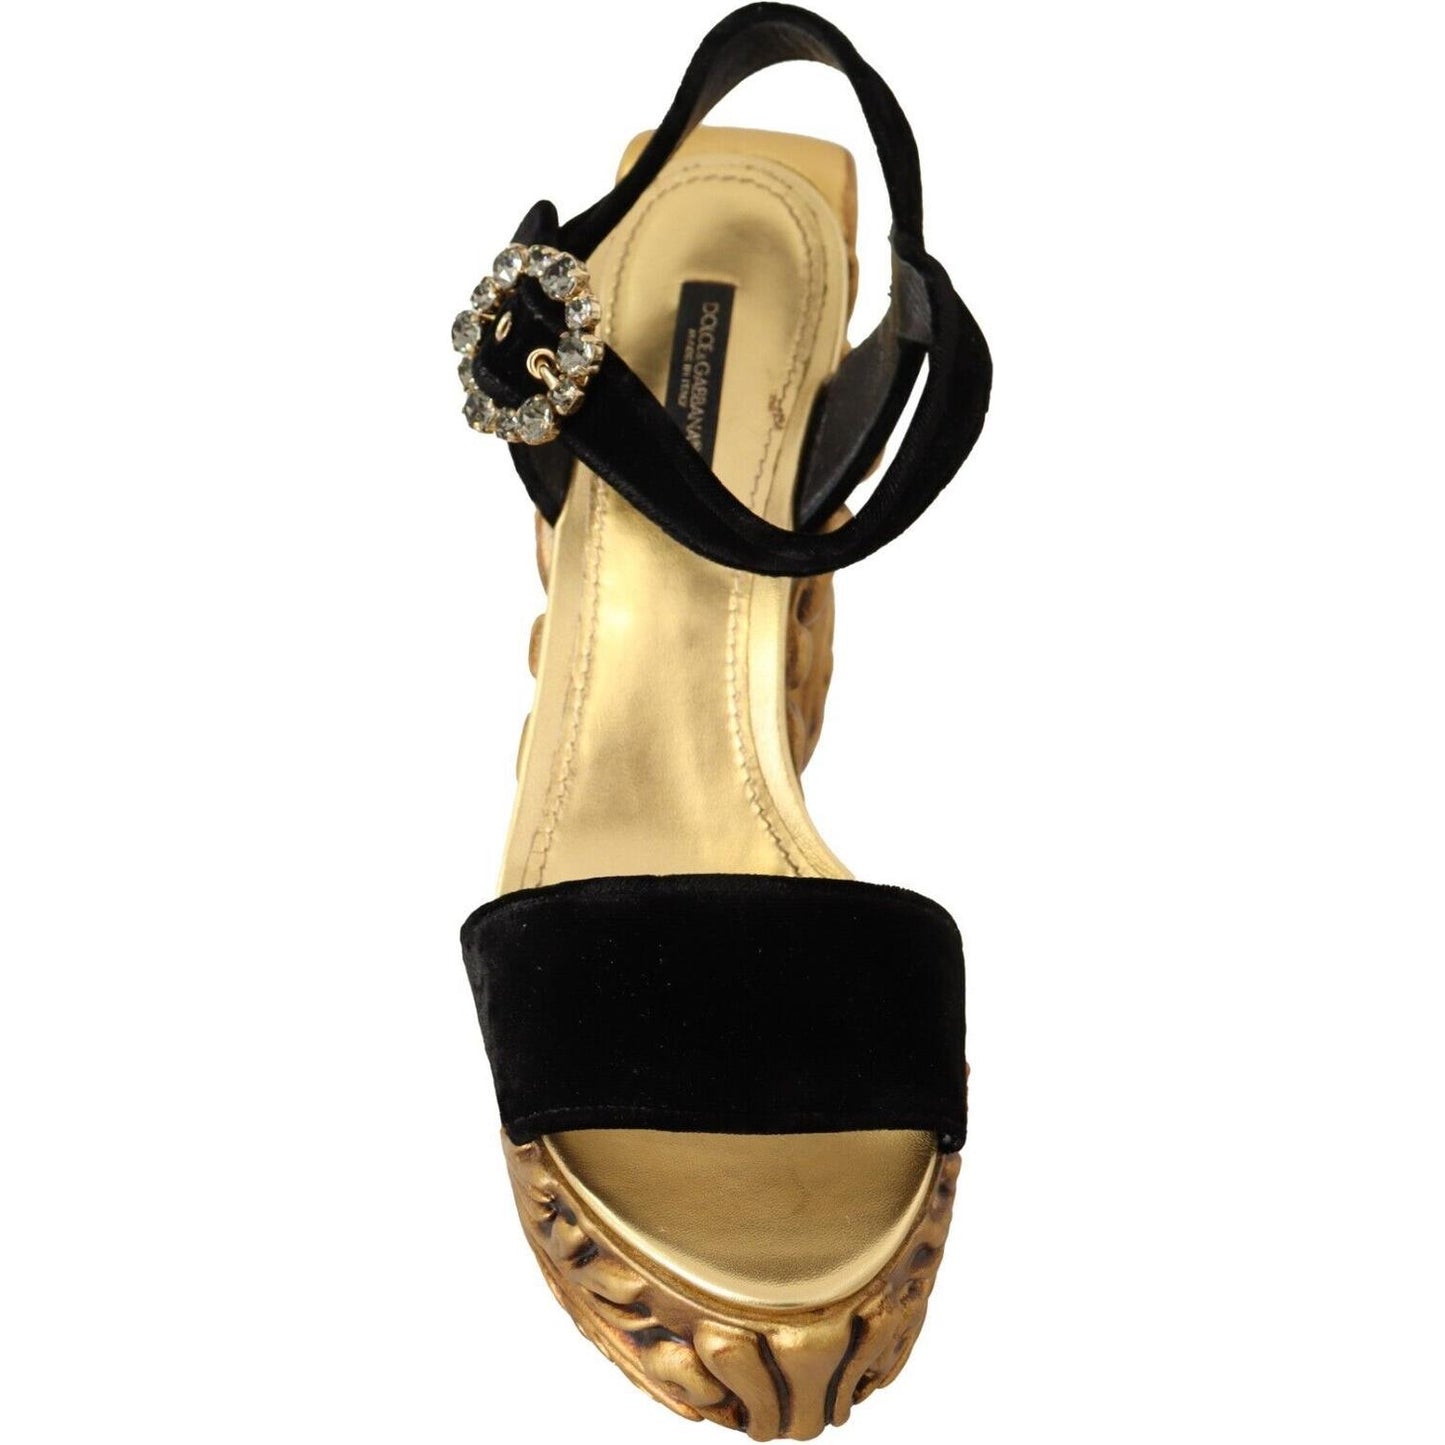 Dolce & Gabbana Baroque Velvet Heels in Black and Gold black-gold-baroque-velvet-heels-crystal-shoes